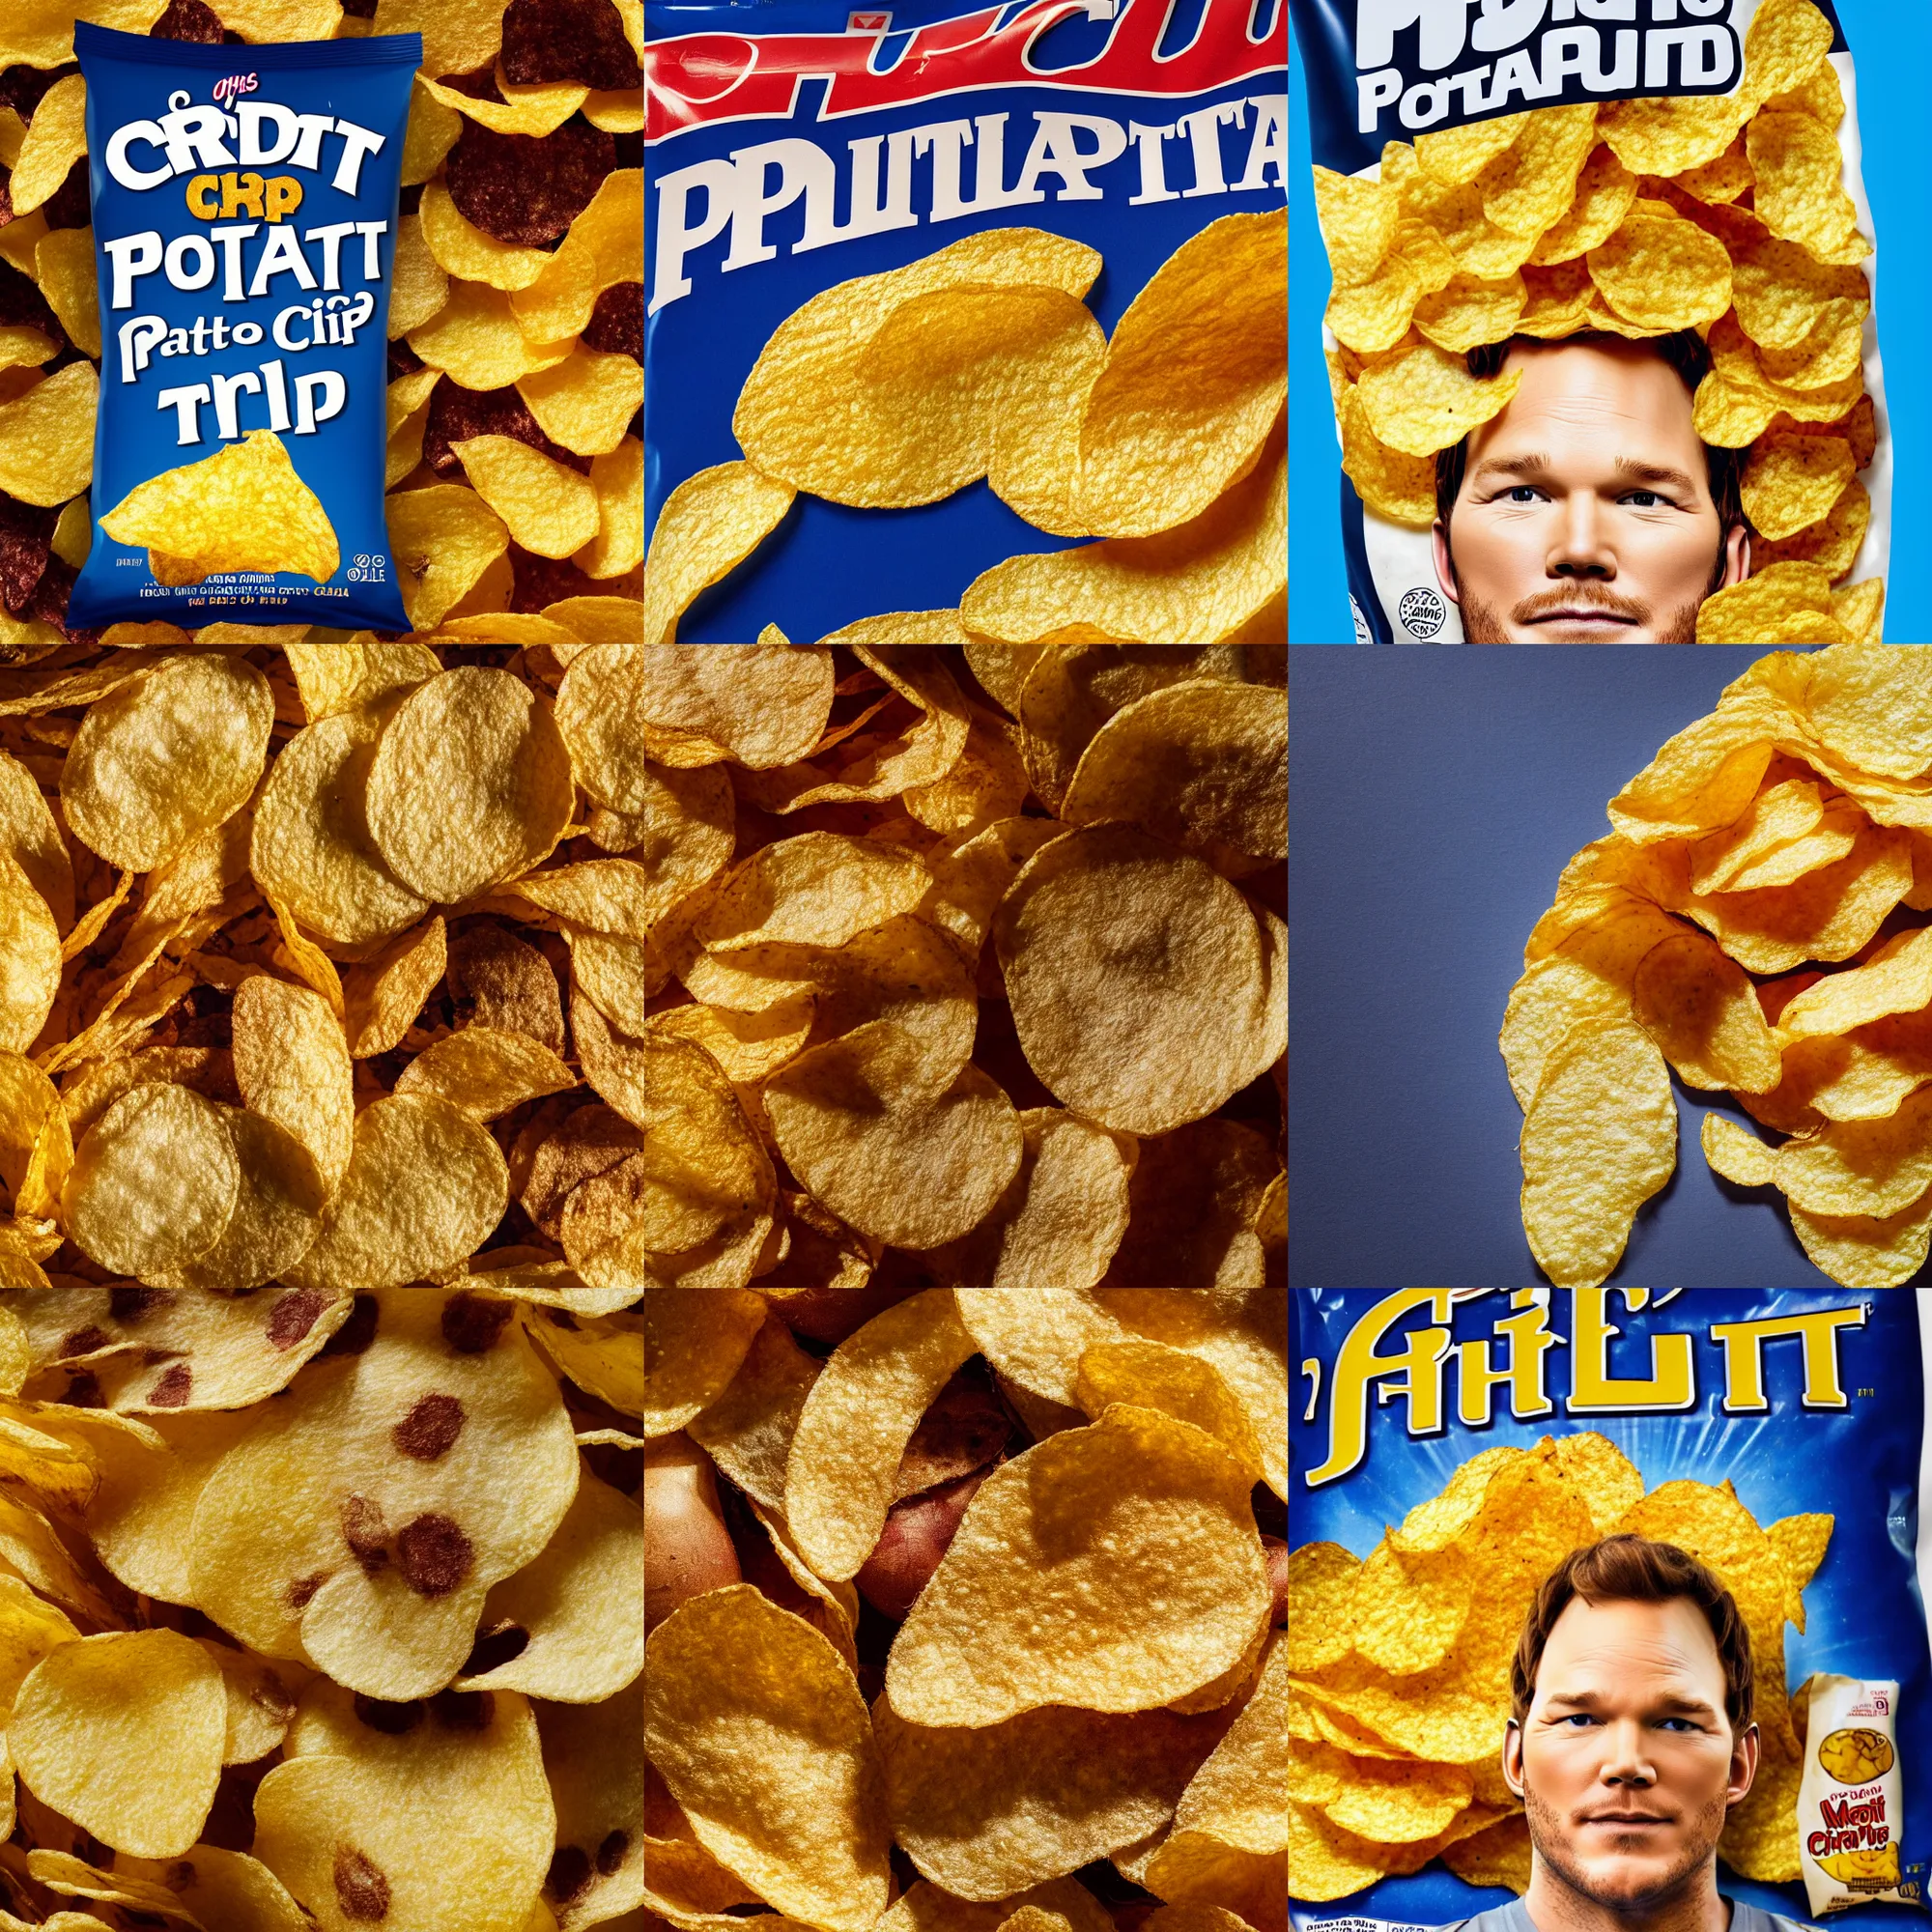 Prompt: chris pratt potato chip, chris pratt's face as a potato chip, texture, potato crisp, macro shot, high detail photo, close up